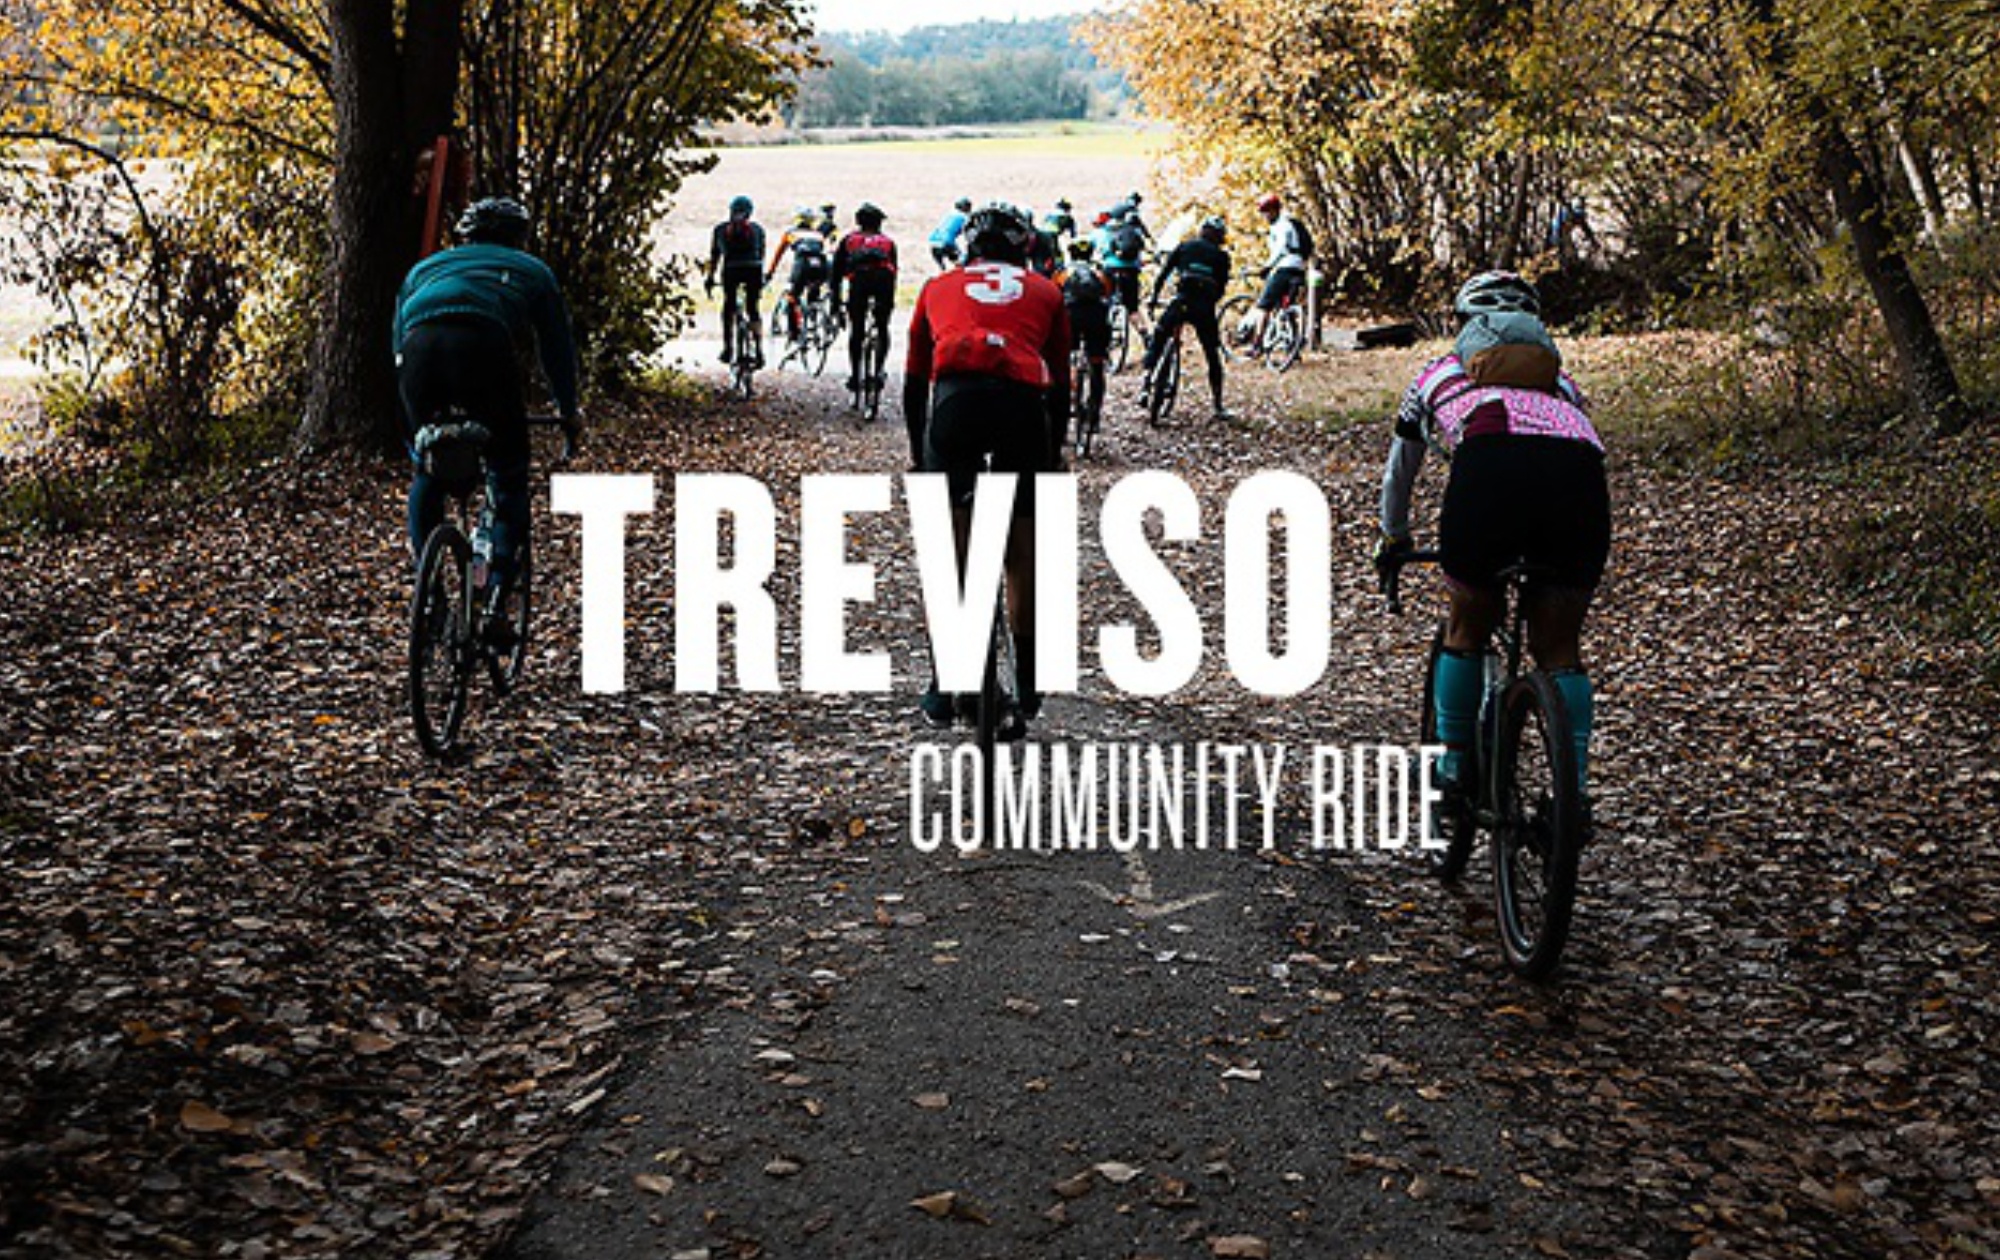 sportler community ride treviso